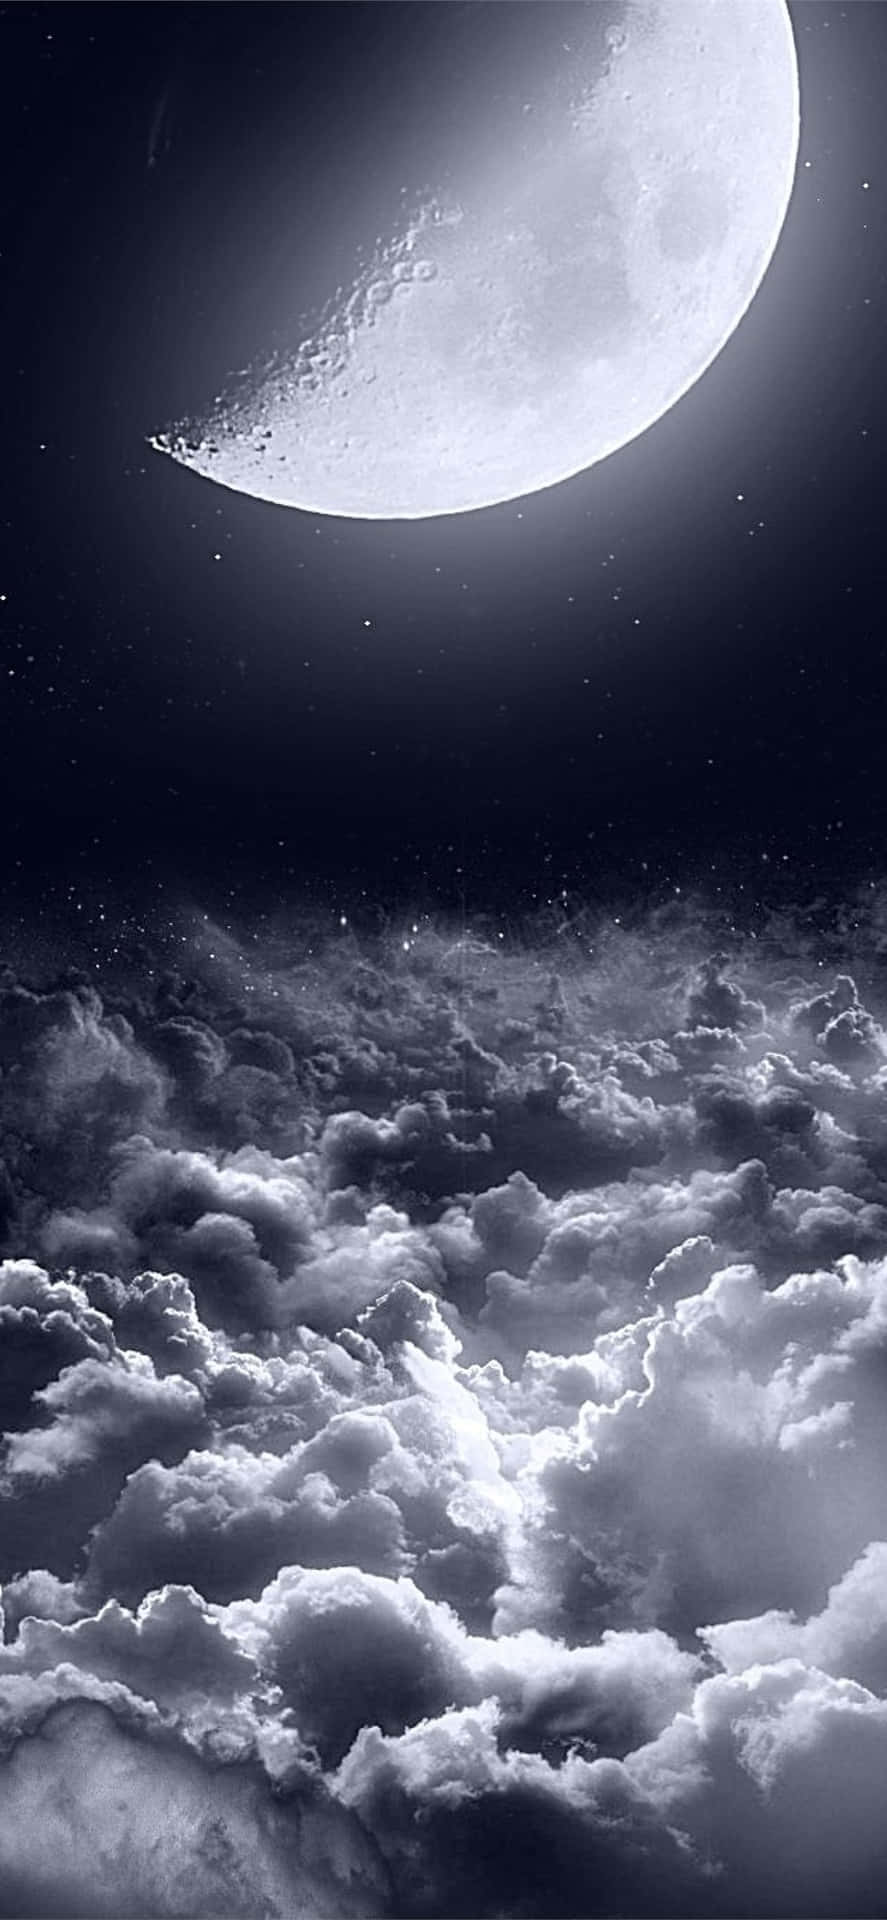 Majestic Full Moon In The Night Sky